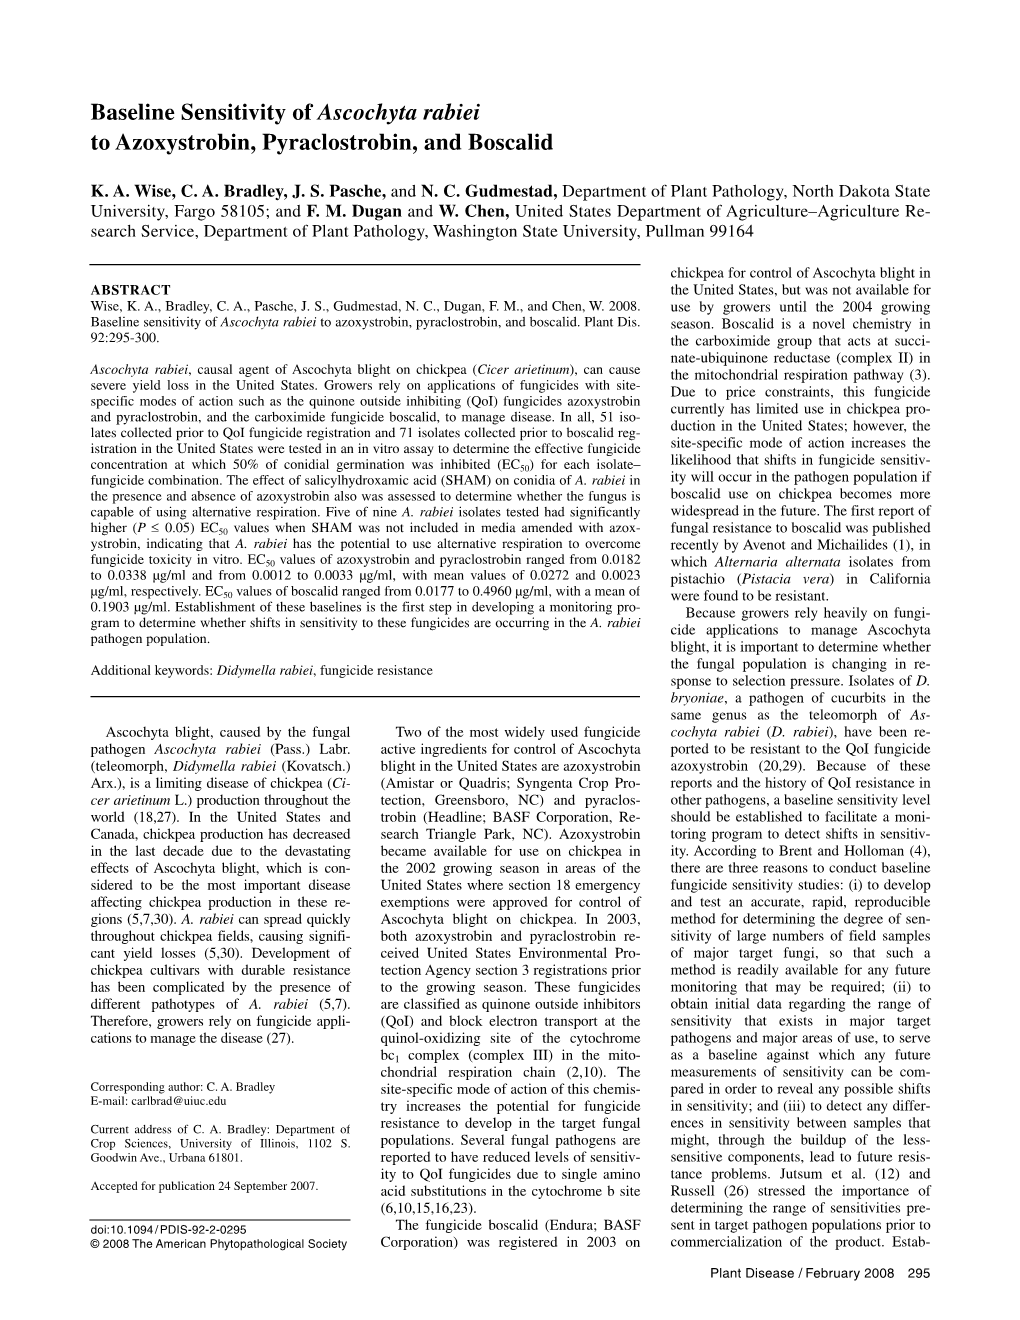 Baseline Sensitivity of Ascochyta Rabiei to Azoxystrobin, Pyraclostrobin, and Boscalid